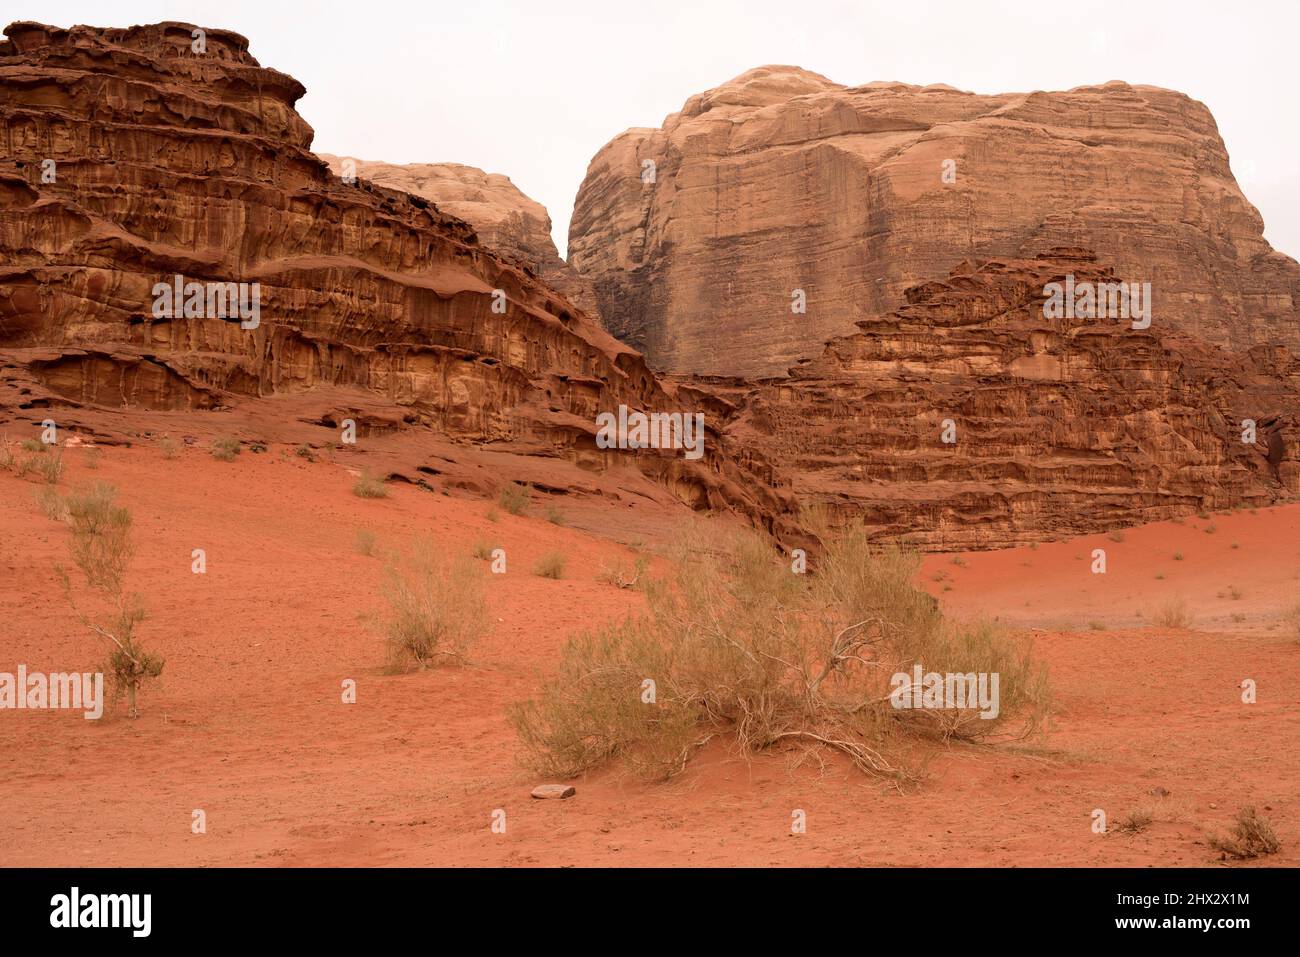 Wadi Rum or Valley of the Moon (UNESCO World Heritage). Sandstone mountains and desert. Jordan. Stock Photo